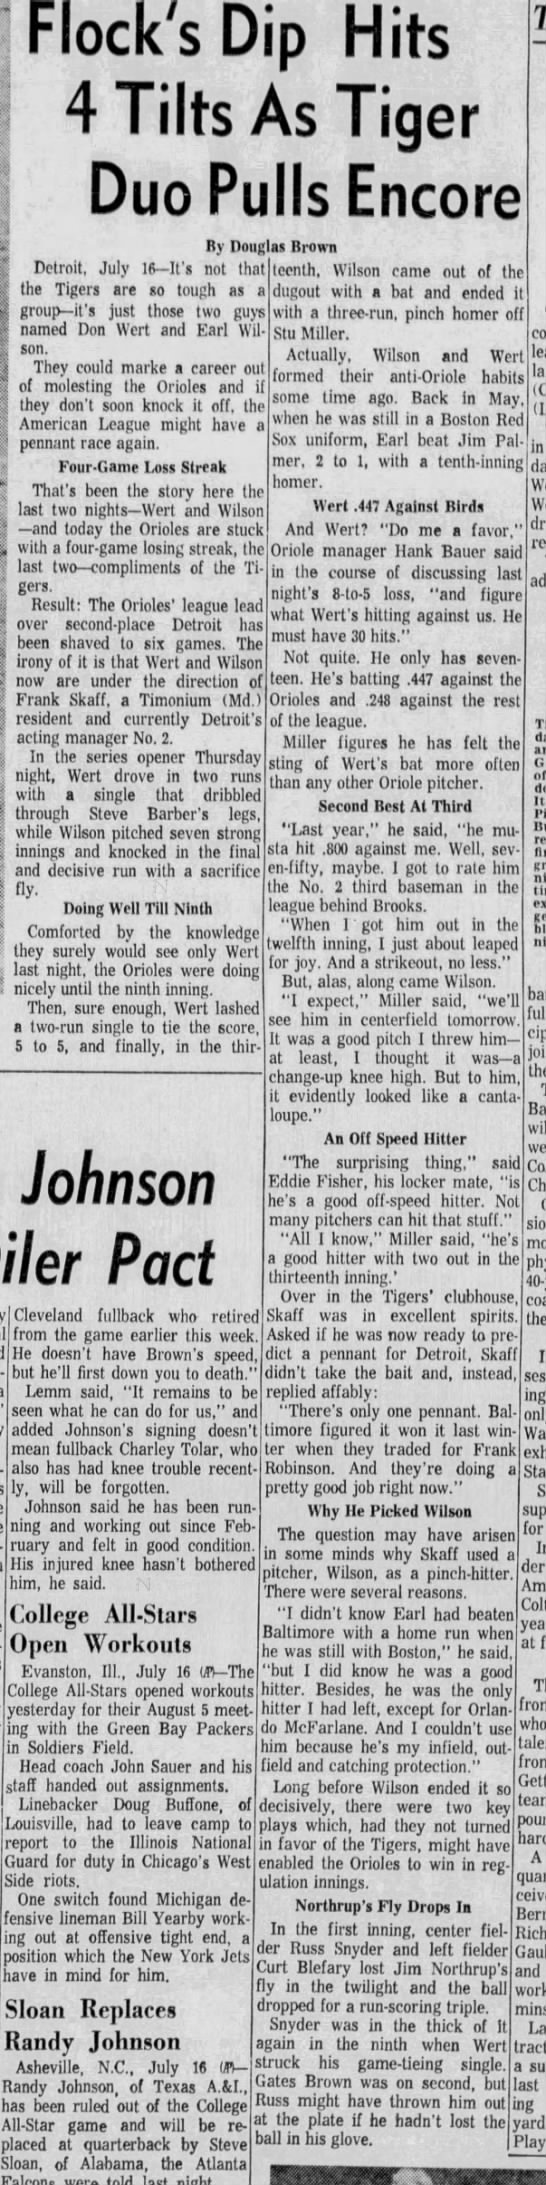 Sat 7/16/1966: Earl Wilson PH Walk-Off HR - 